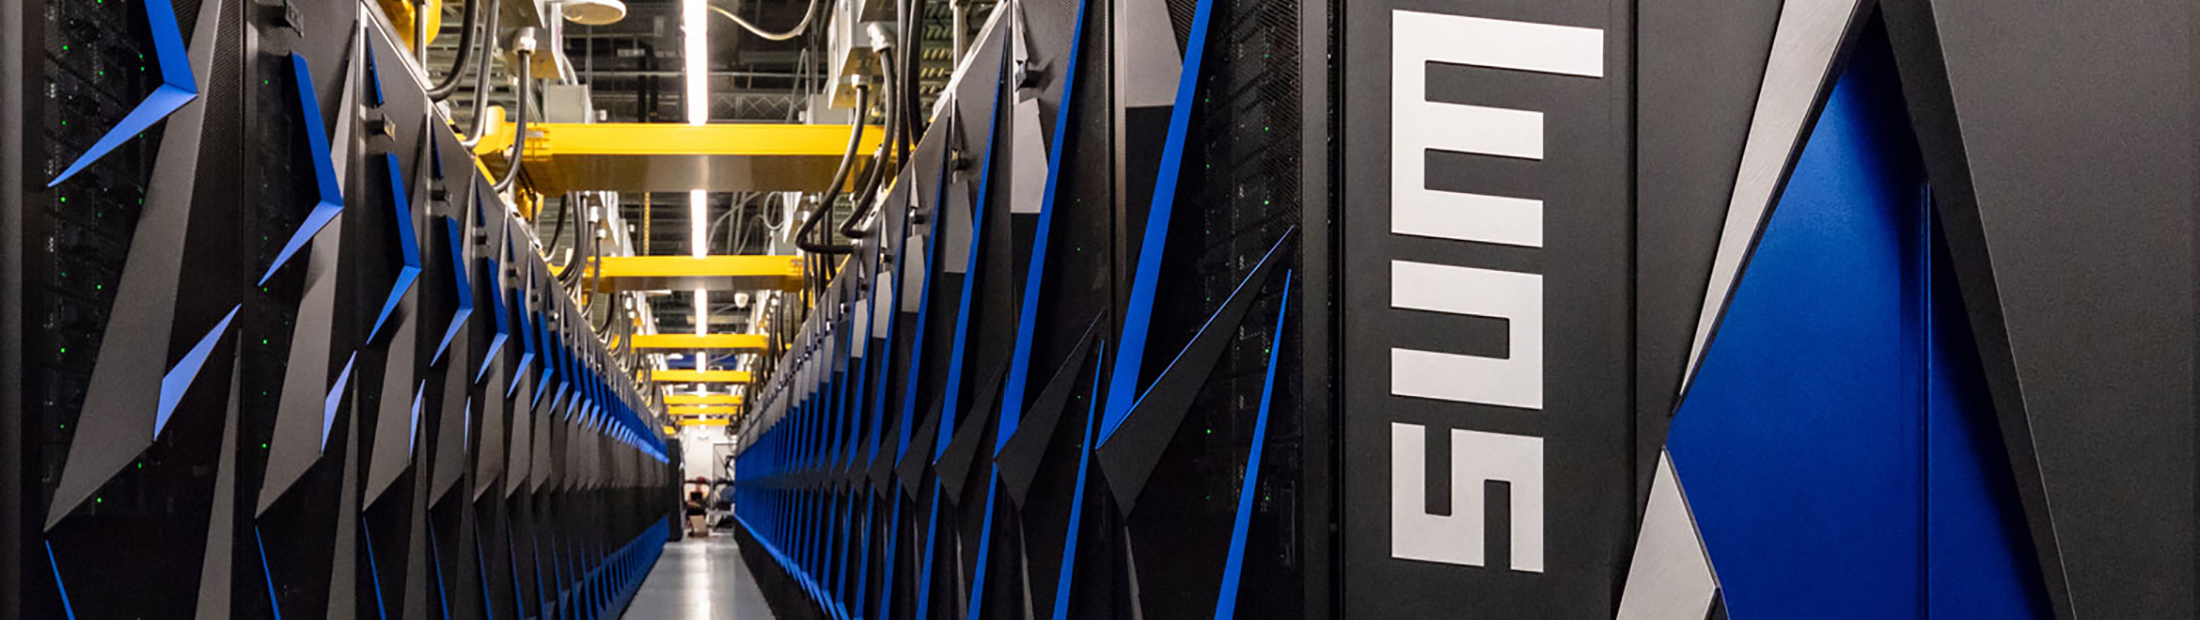 an image of the summit supercomputer data storage